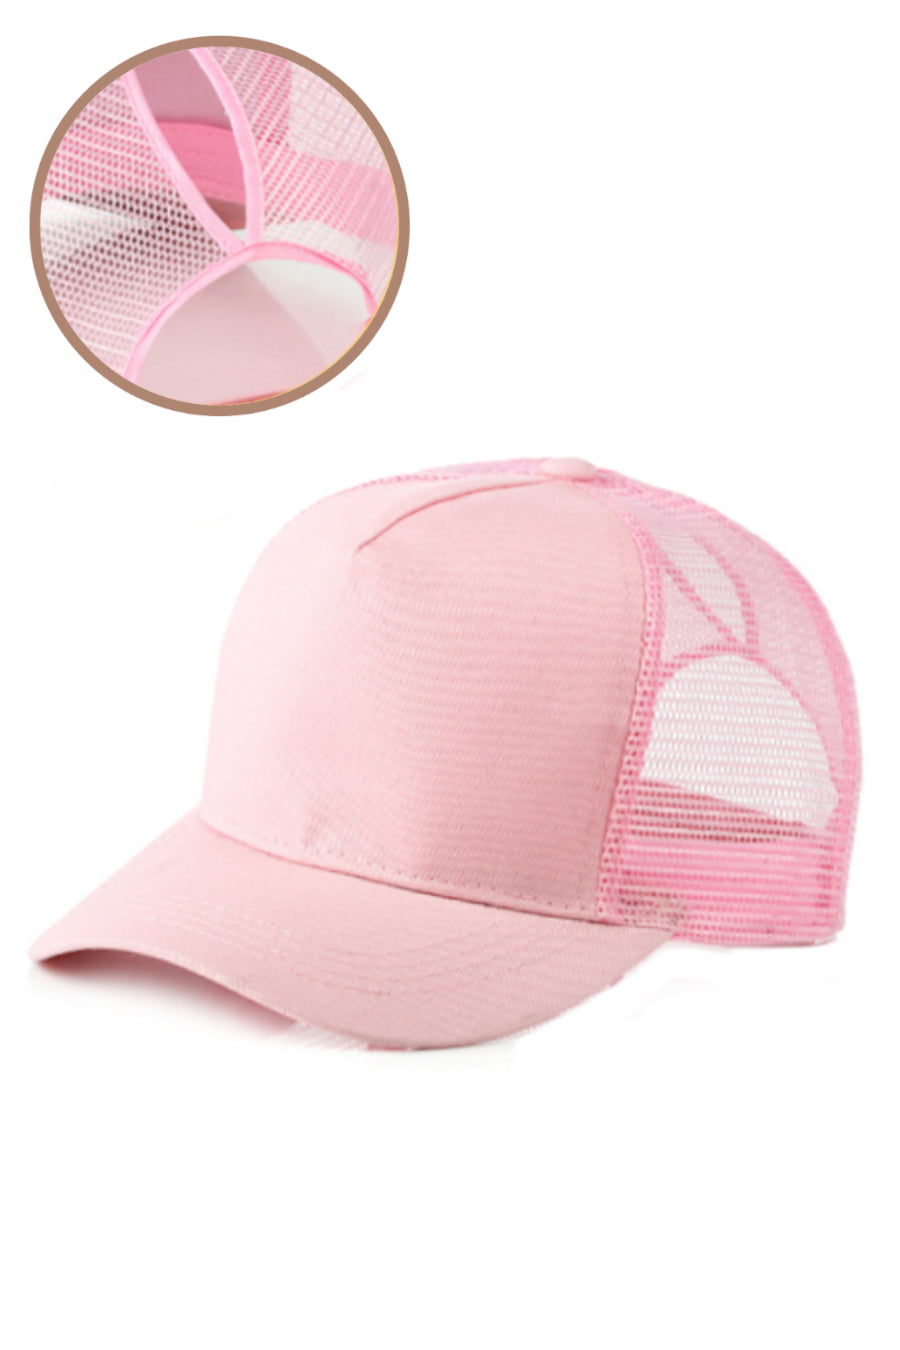 Contour High Ponytail Cap - Baby Pink